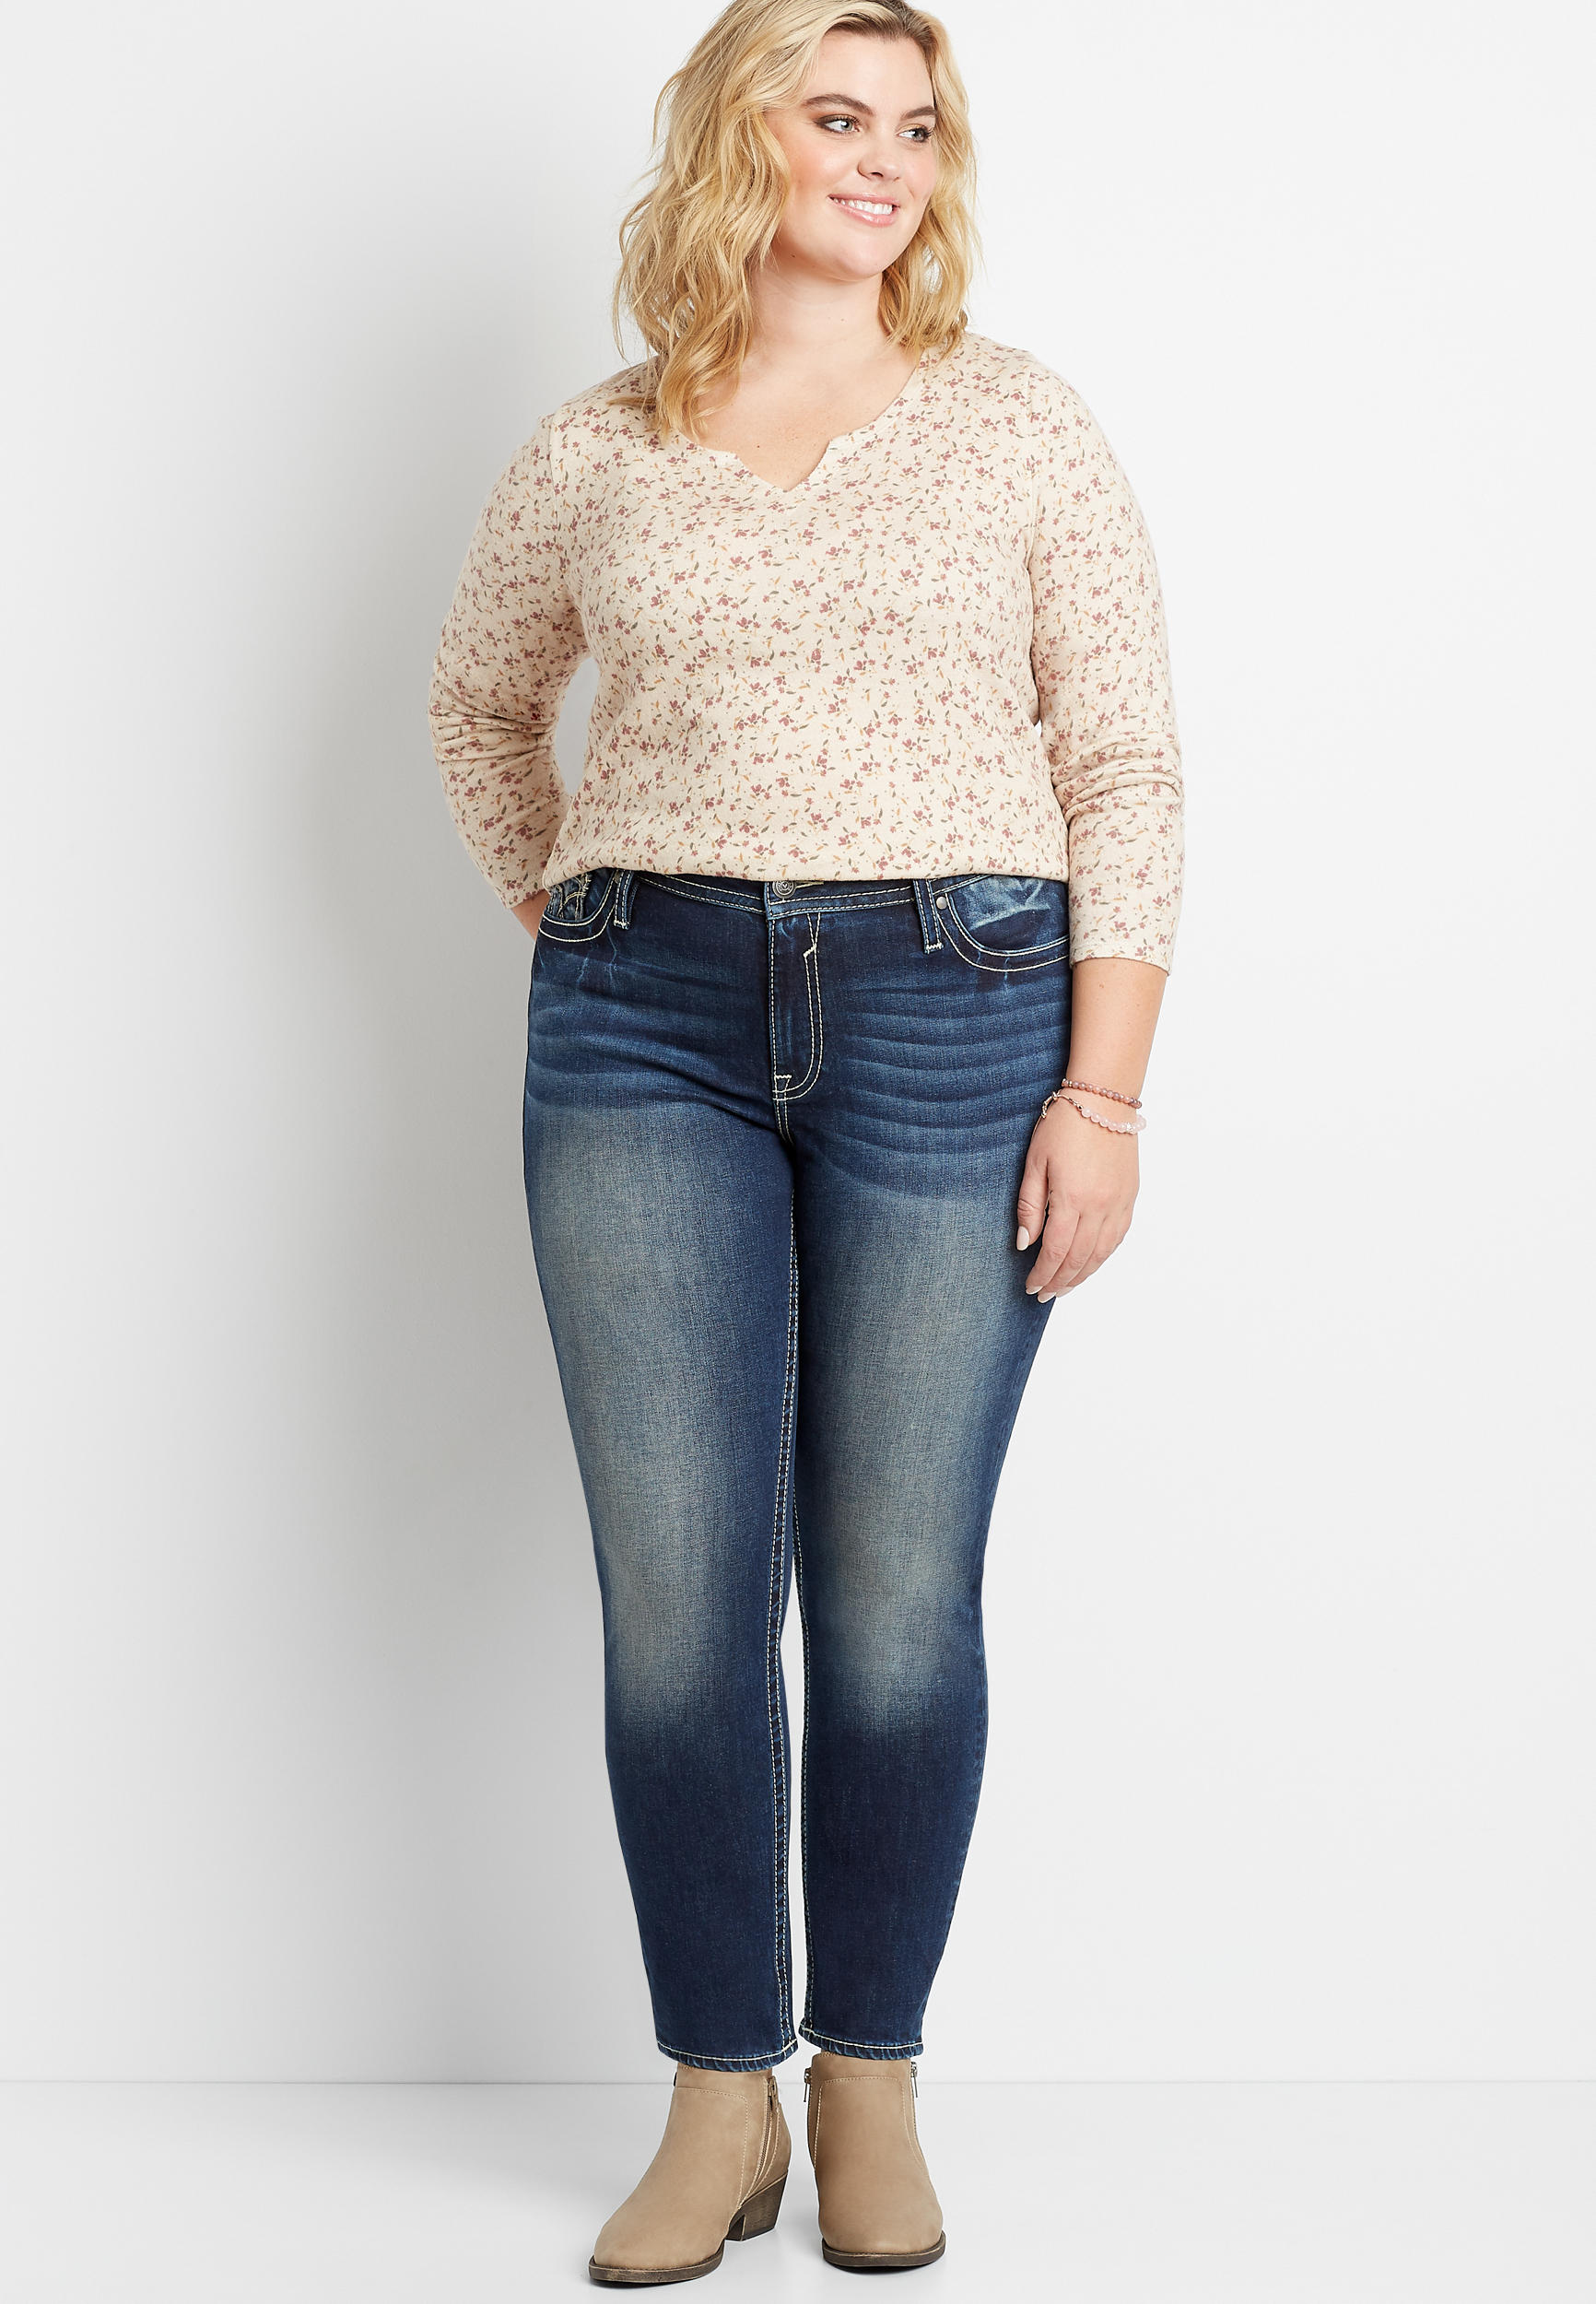 New Women's Ex M&S Skinny Jeans Washed Indigo Mid Rise jegging Plus Size 18-24 